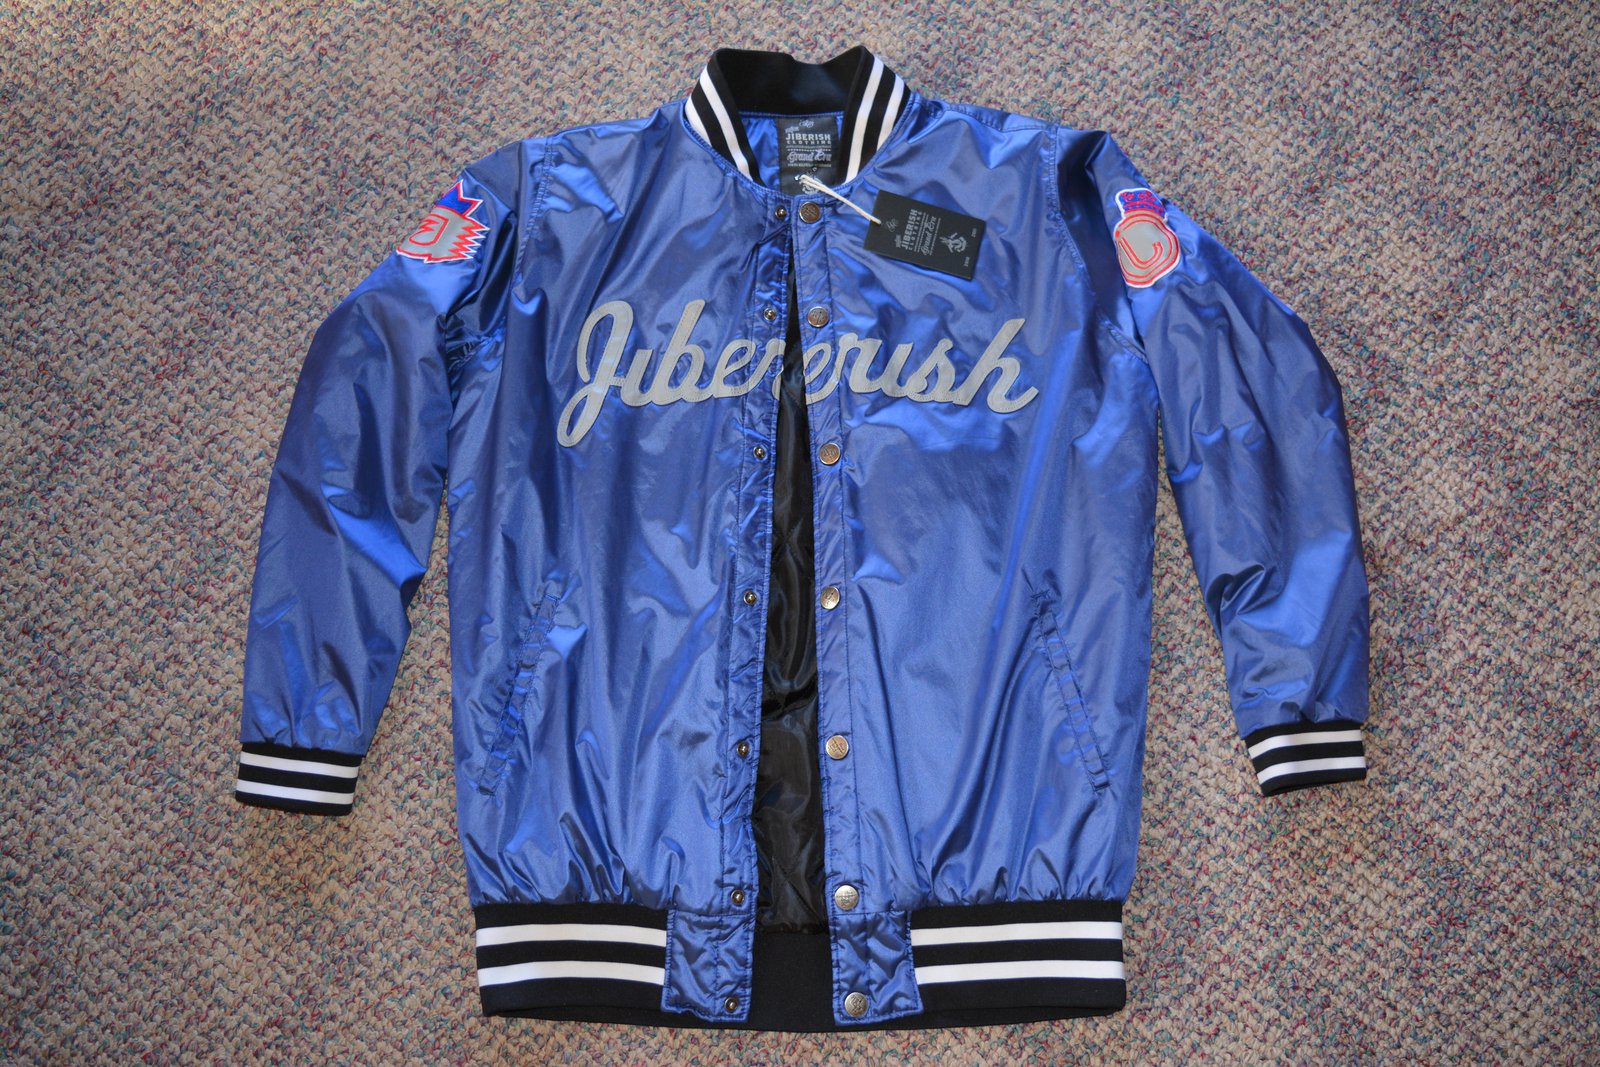 NEW Jiberish XL 2 Jackets, Sweater and 4 Tees - Sell and Trade